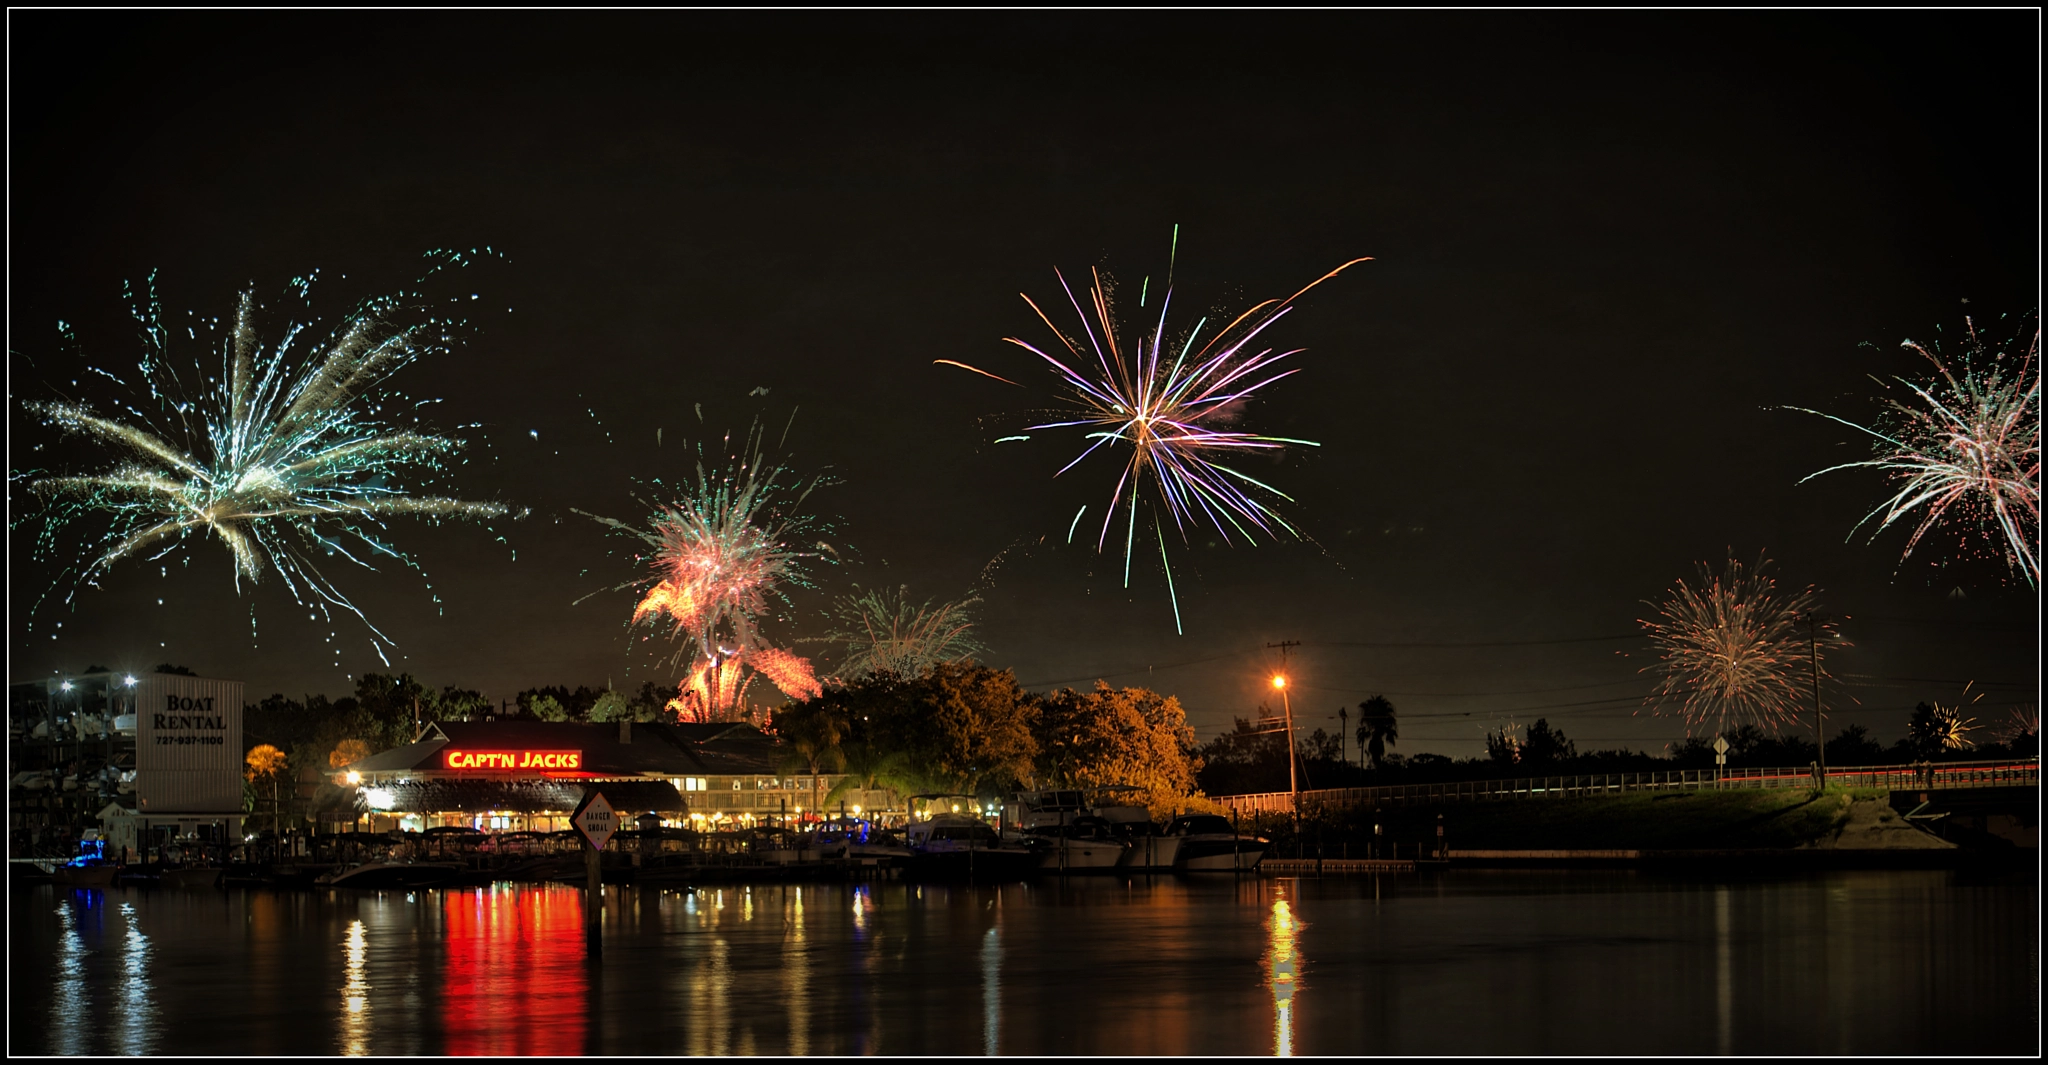 Fireworks at Capt N Jacks Tarpon Springs Florida.psd by Eddie Alcorne